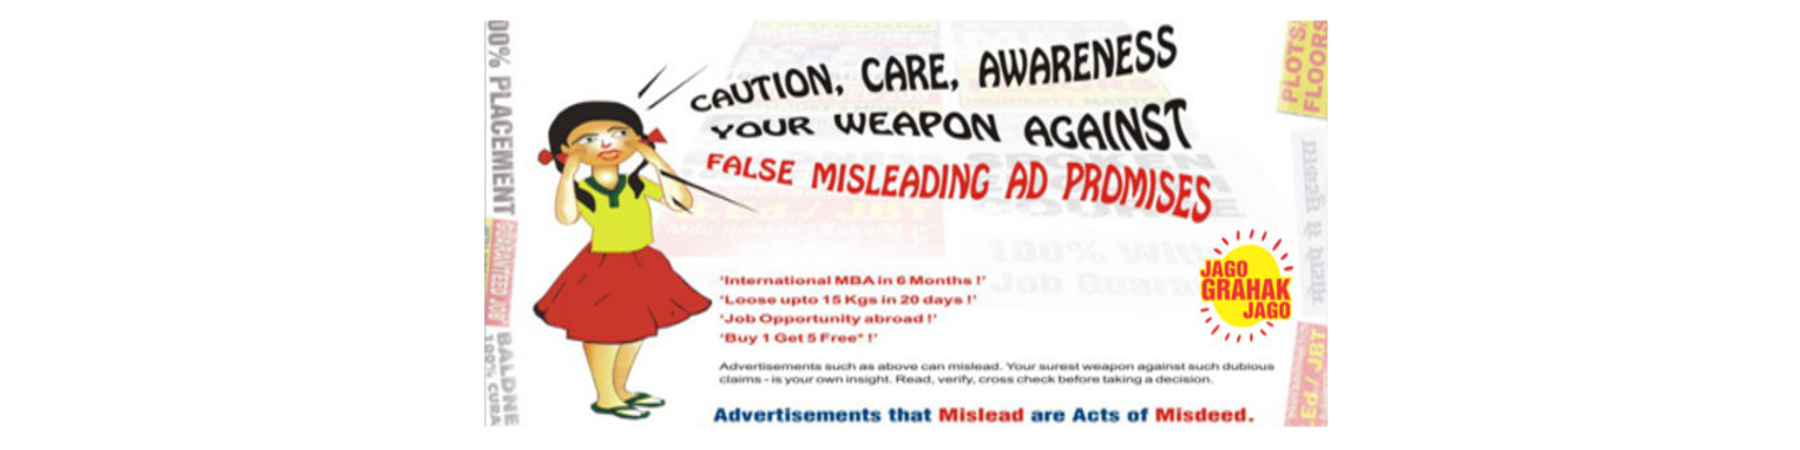 Misleading Advertisements